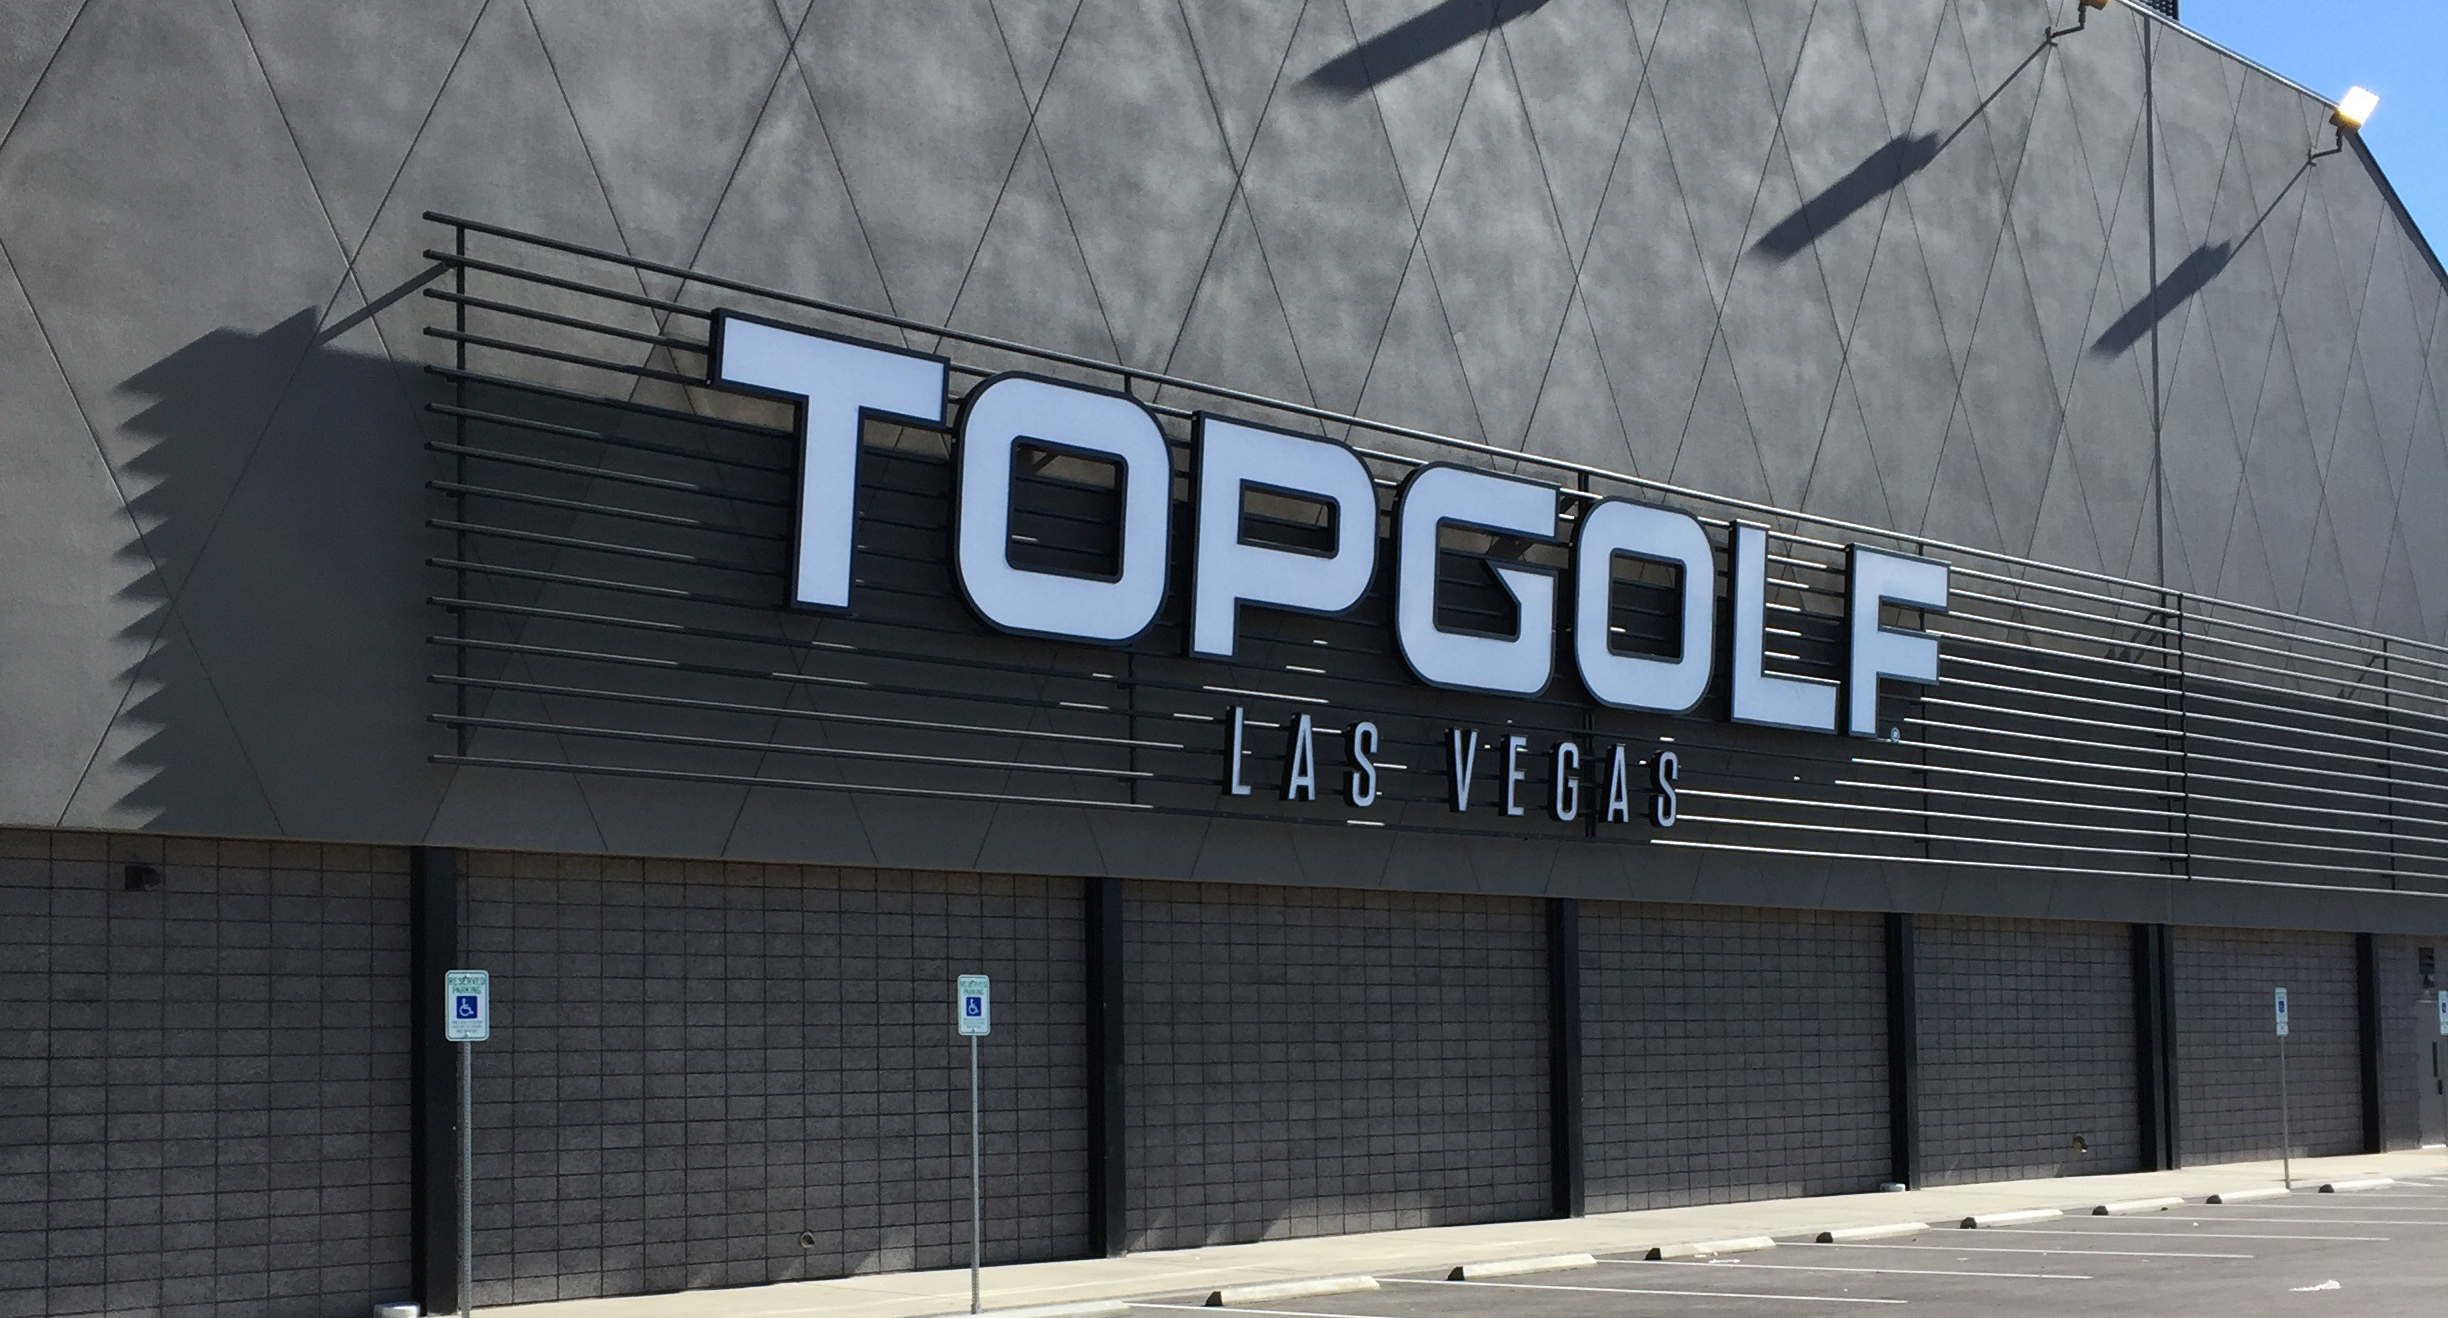 Topgolf Las Vegas Hits A Hole In One Northwest Door